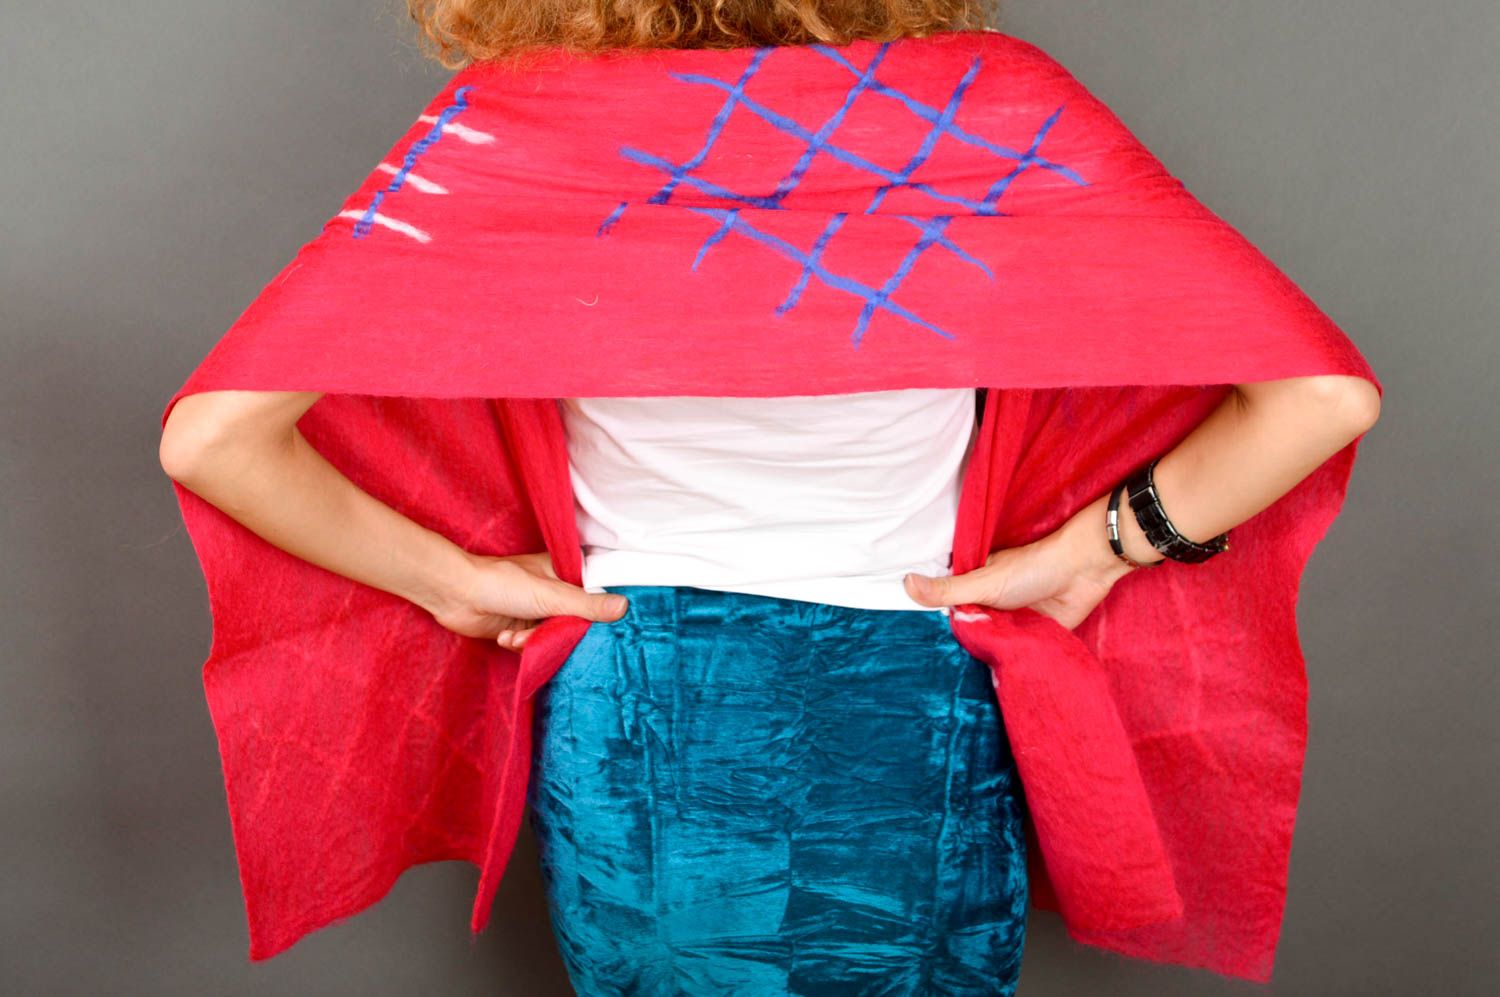 Handmade gefilzter Schal Frauen Accessoire roter Schal aus Wolle gemustert grell foto 5